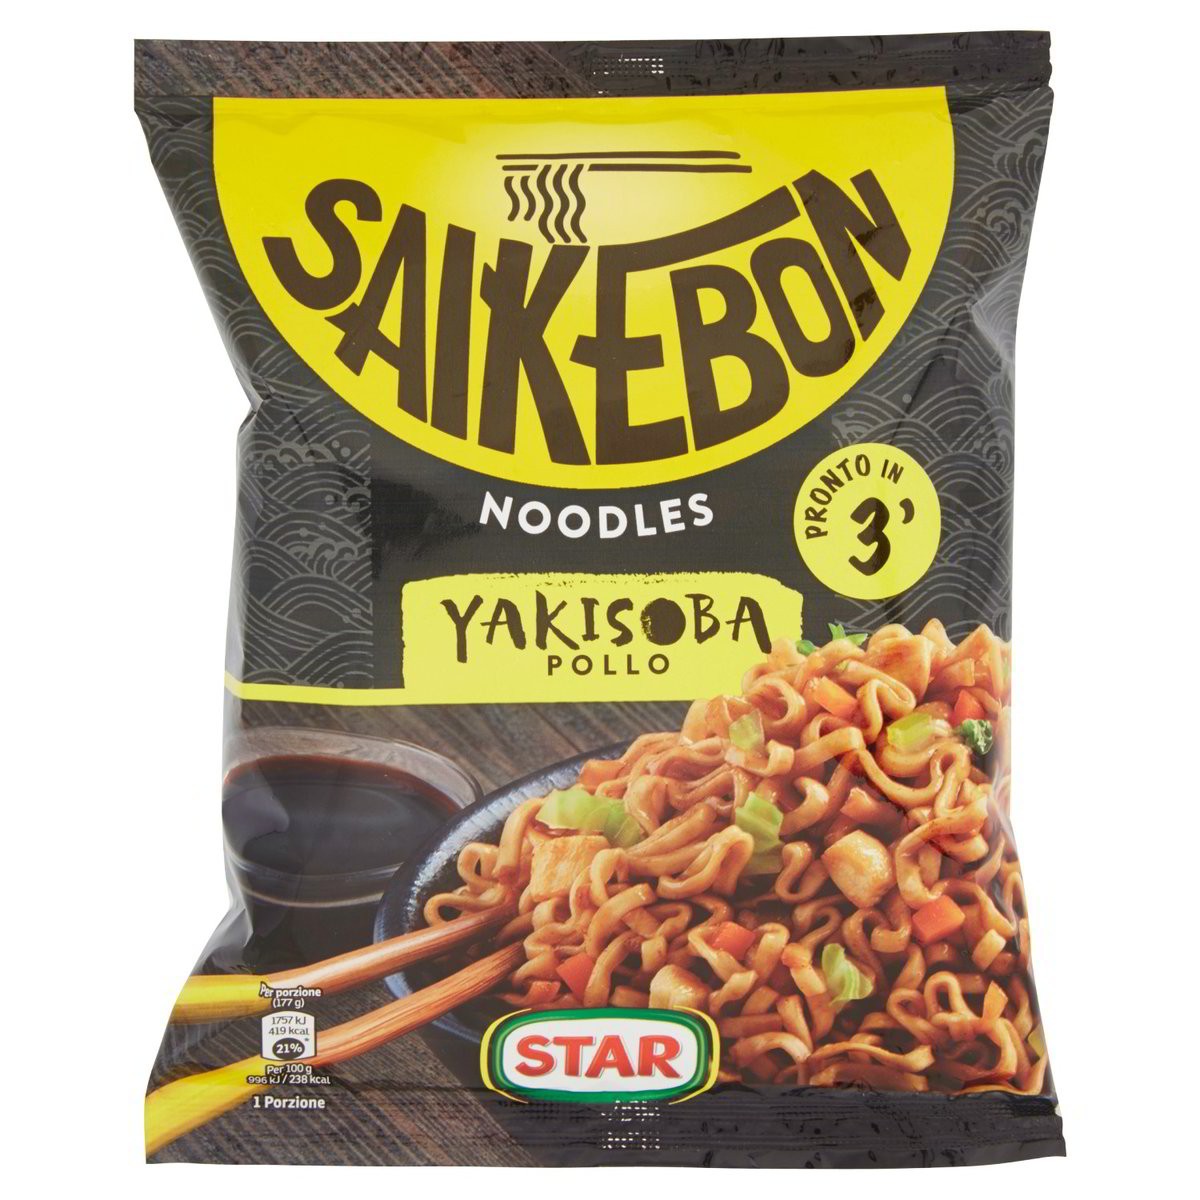 Star Saikebon Yakisoba